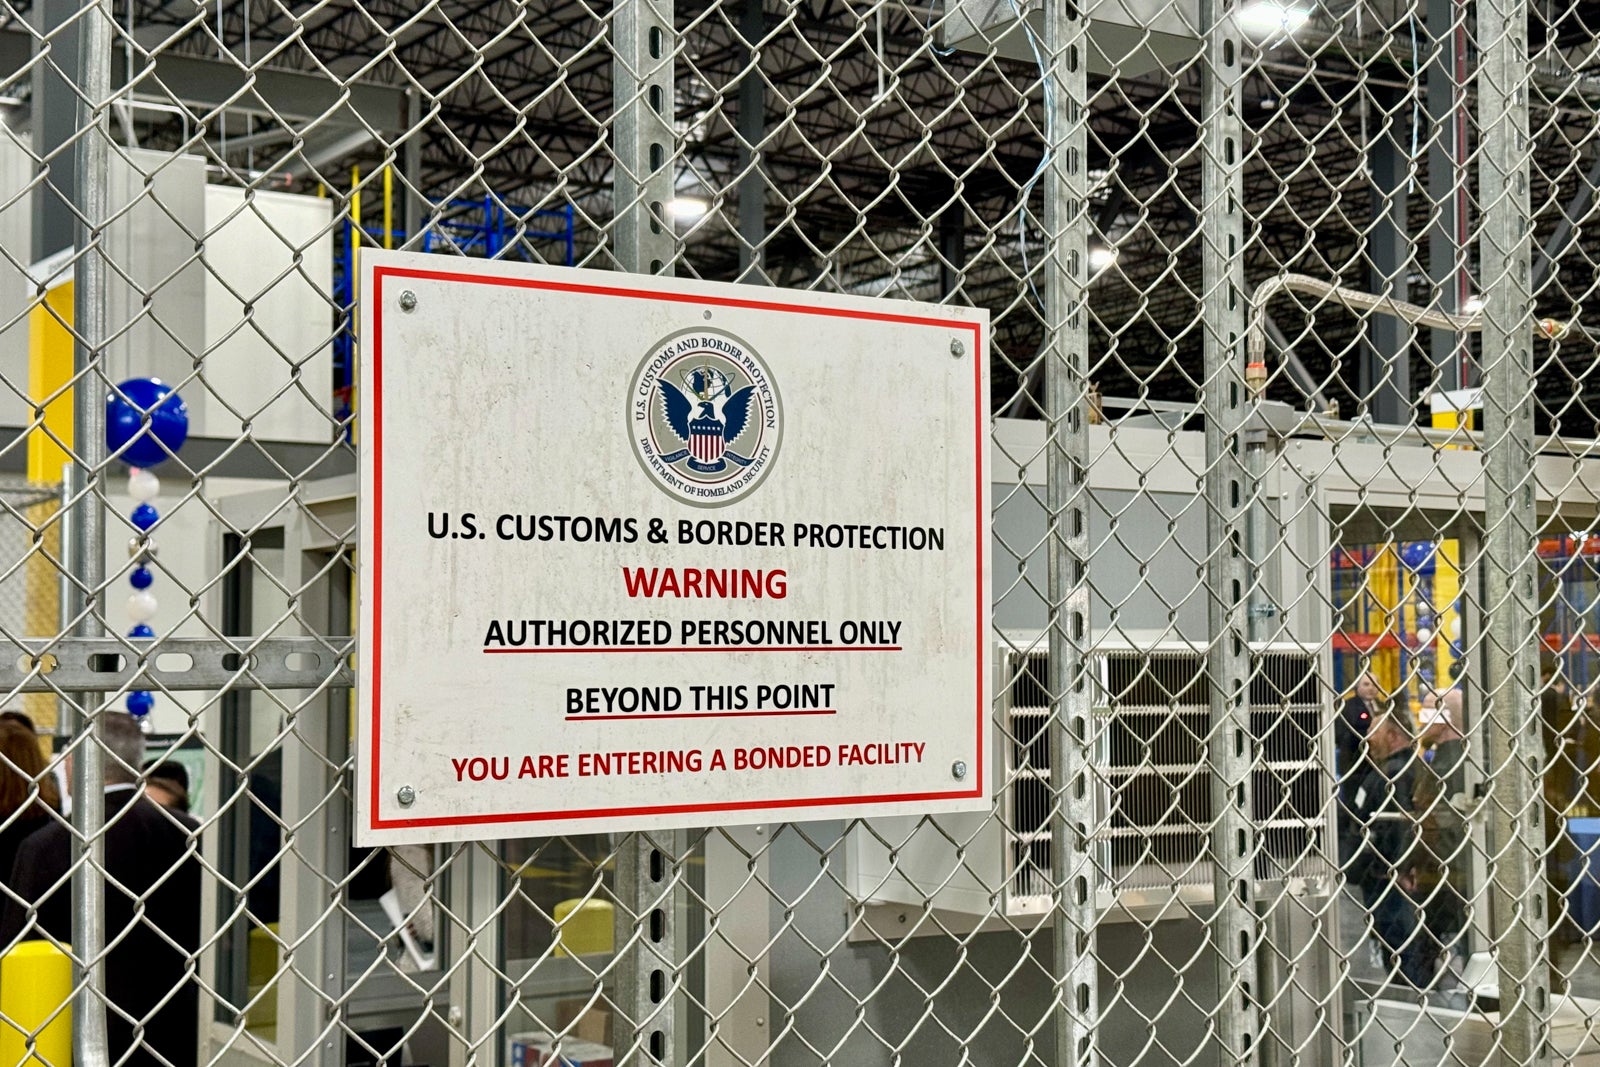 CBP warning sign